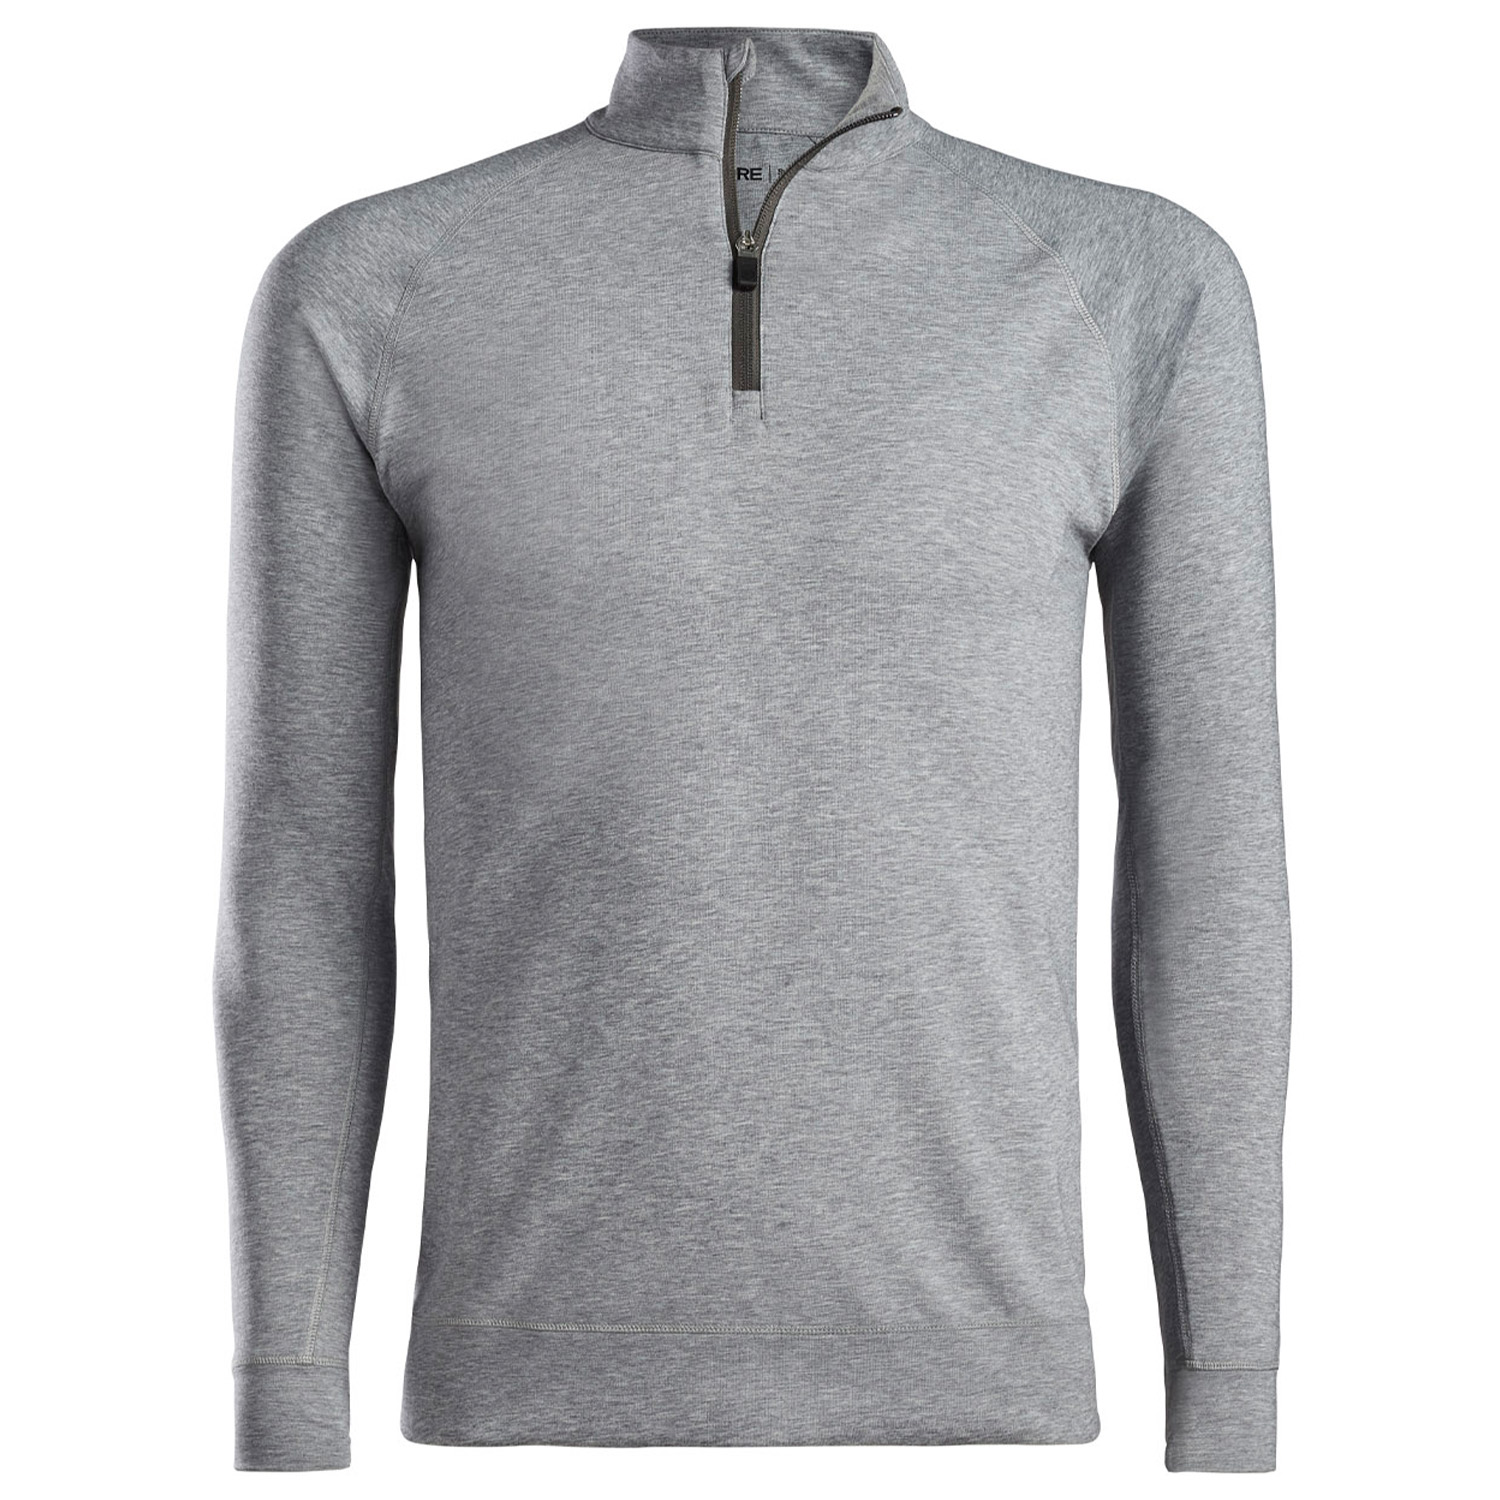 G/FORE Luxe Staple Zip Neck Sweater Heather Grey | Scottsdale Golf